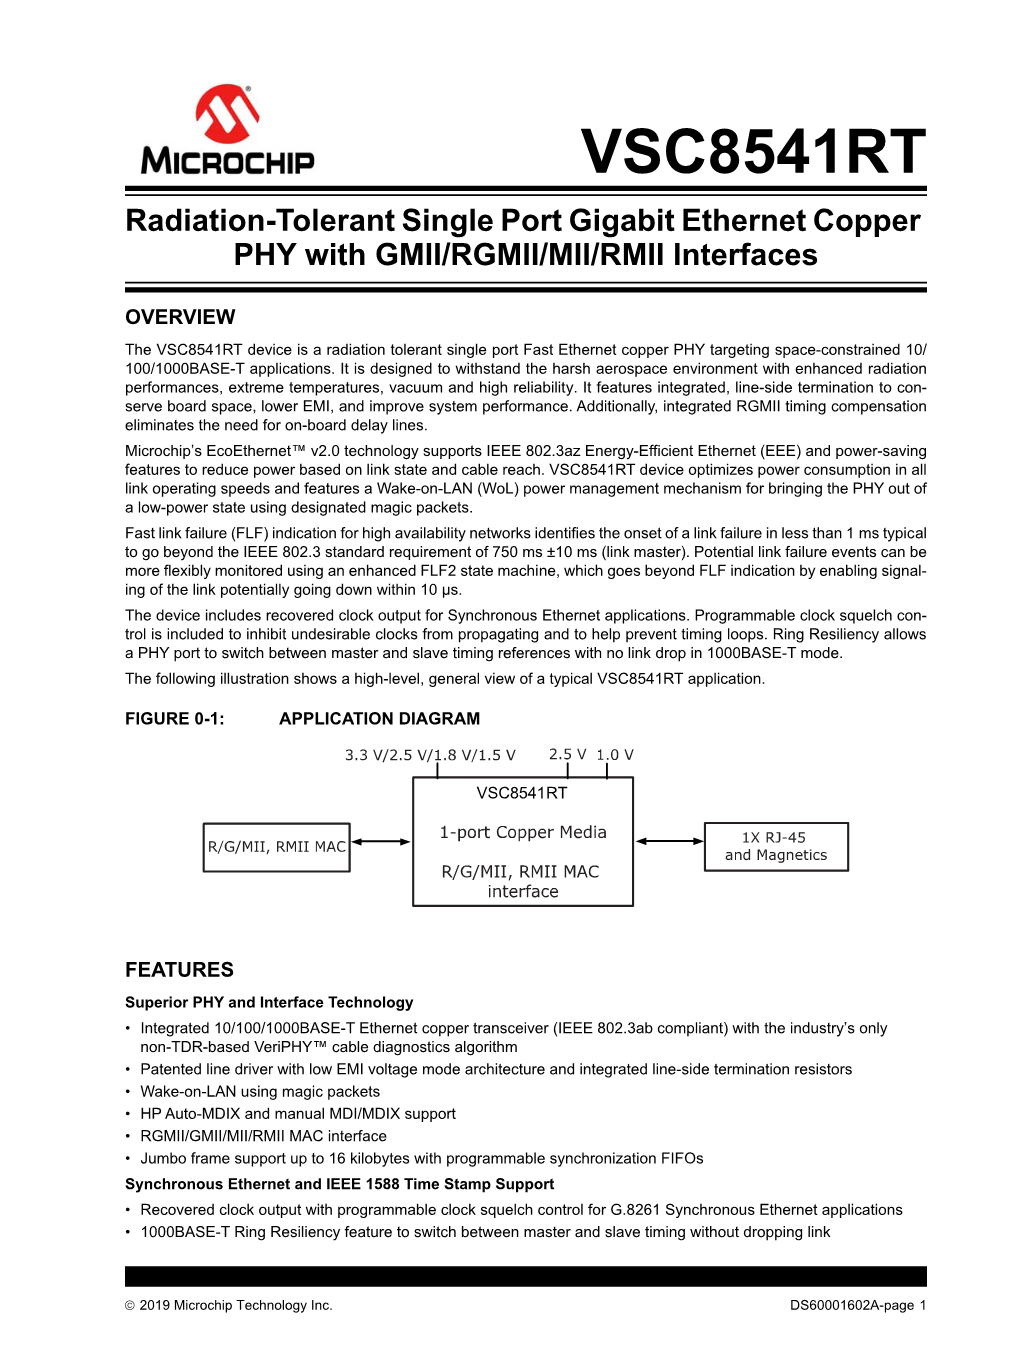 VSC8541RT Radiation-Tolerant Single Port Gigabit Ethernet Copper PHY with GMII/RGMII/MII/RMII Interfaces